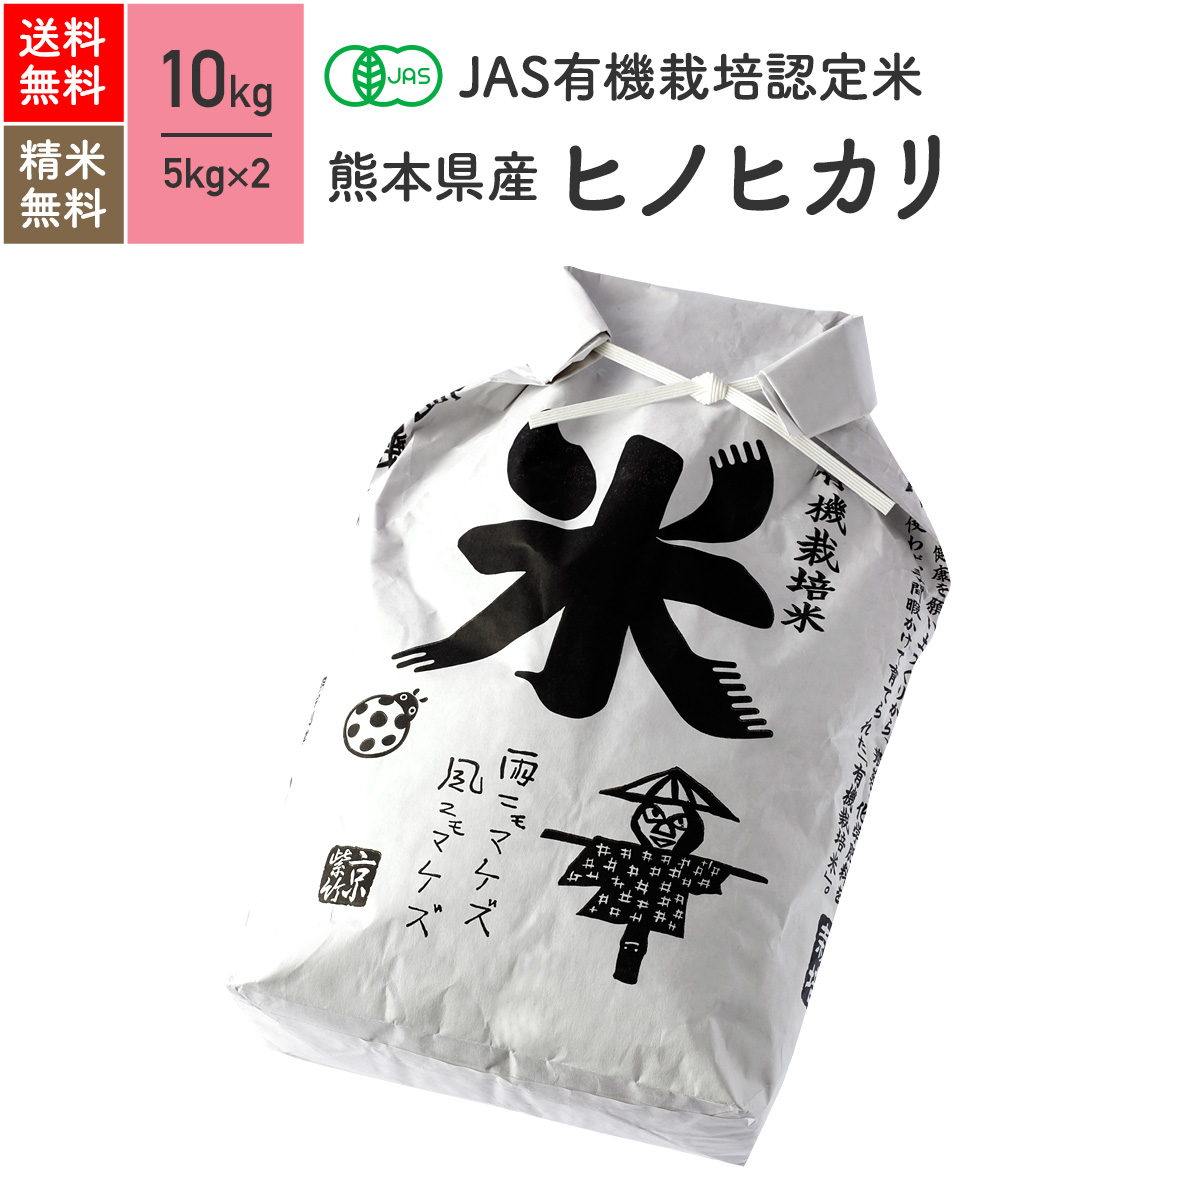 無農薬 玄米 米 10kgヒノヒカリ 熊本県産 JAS有機米 令和元年産 送料無料